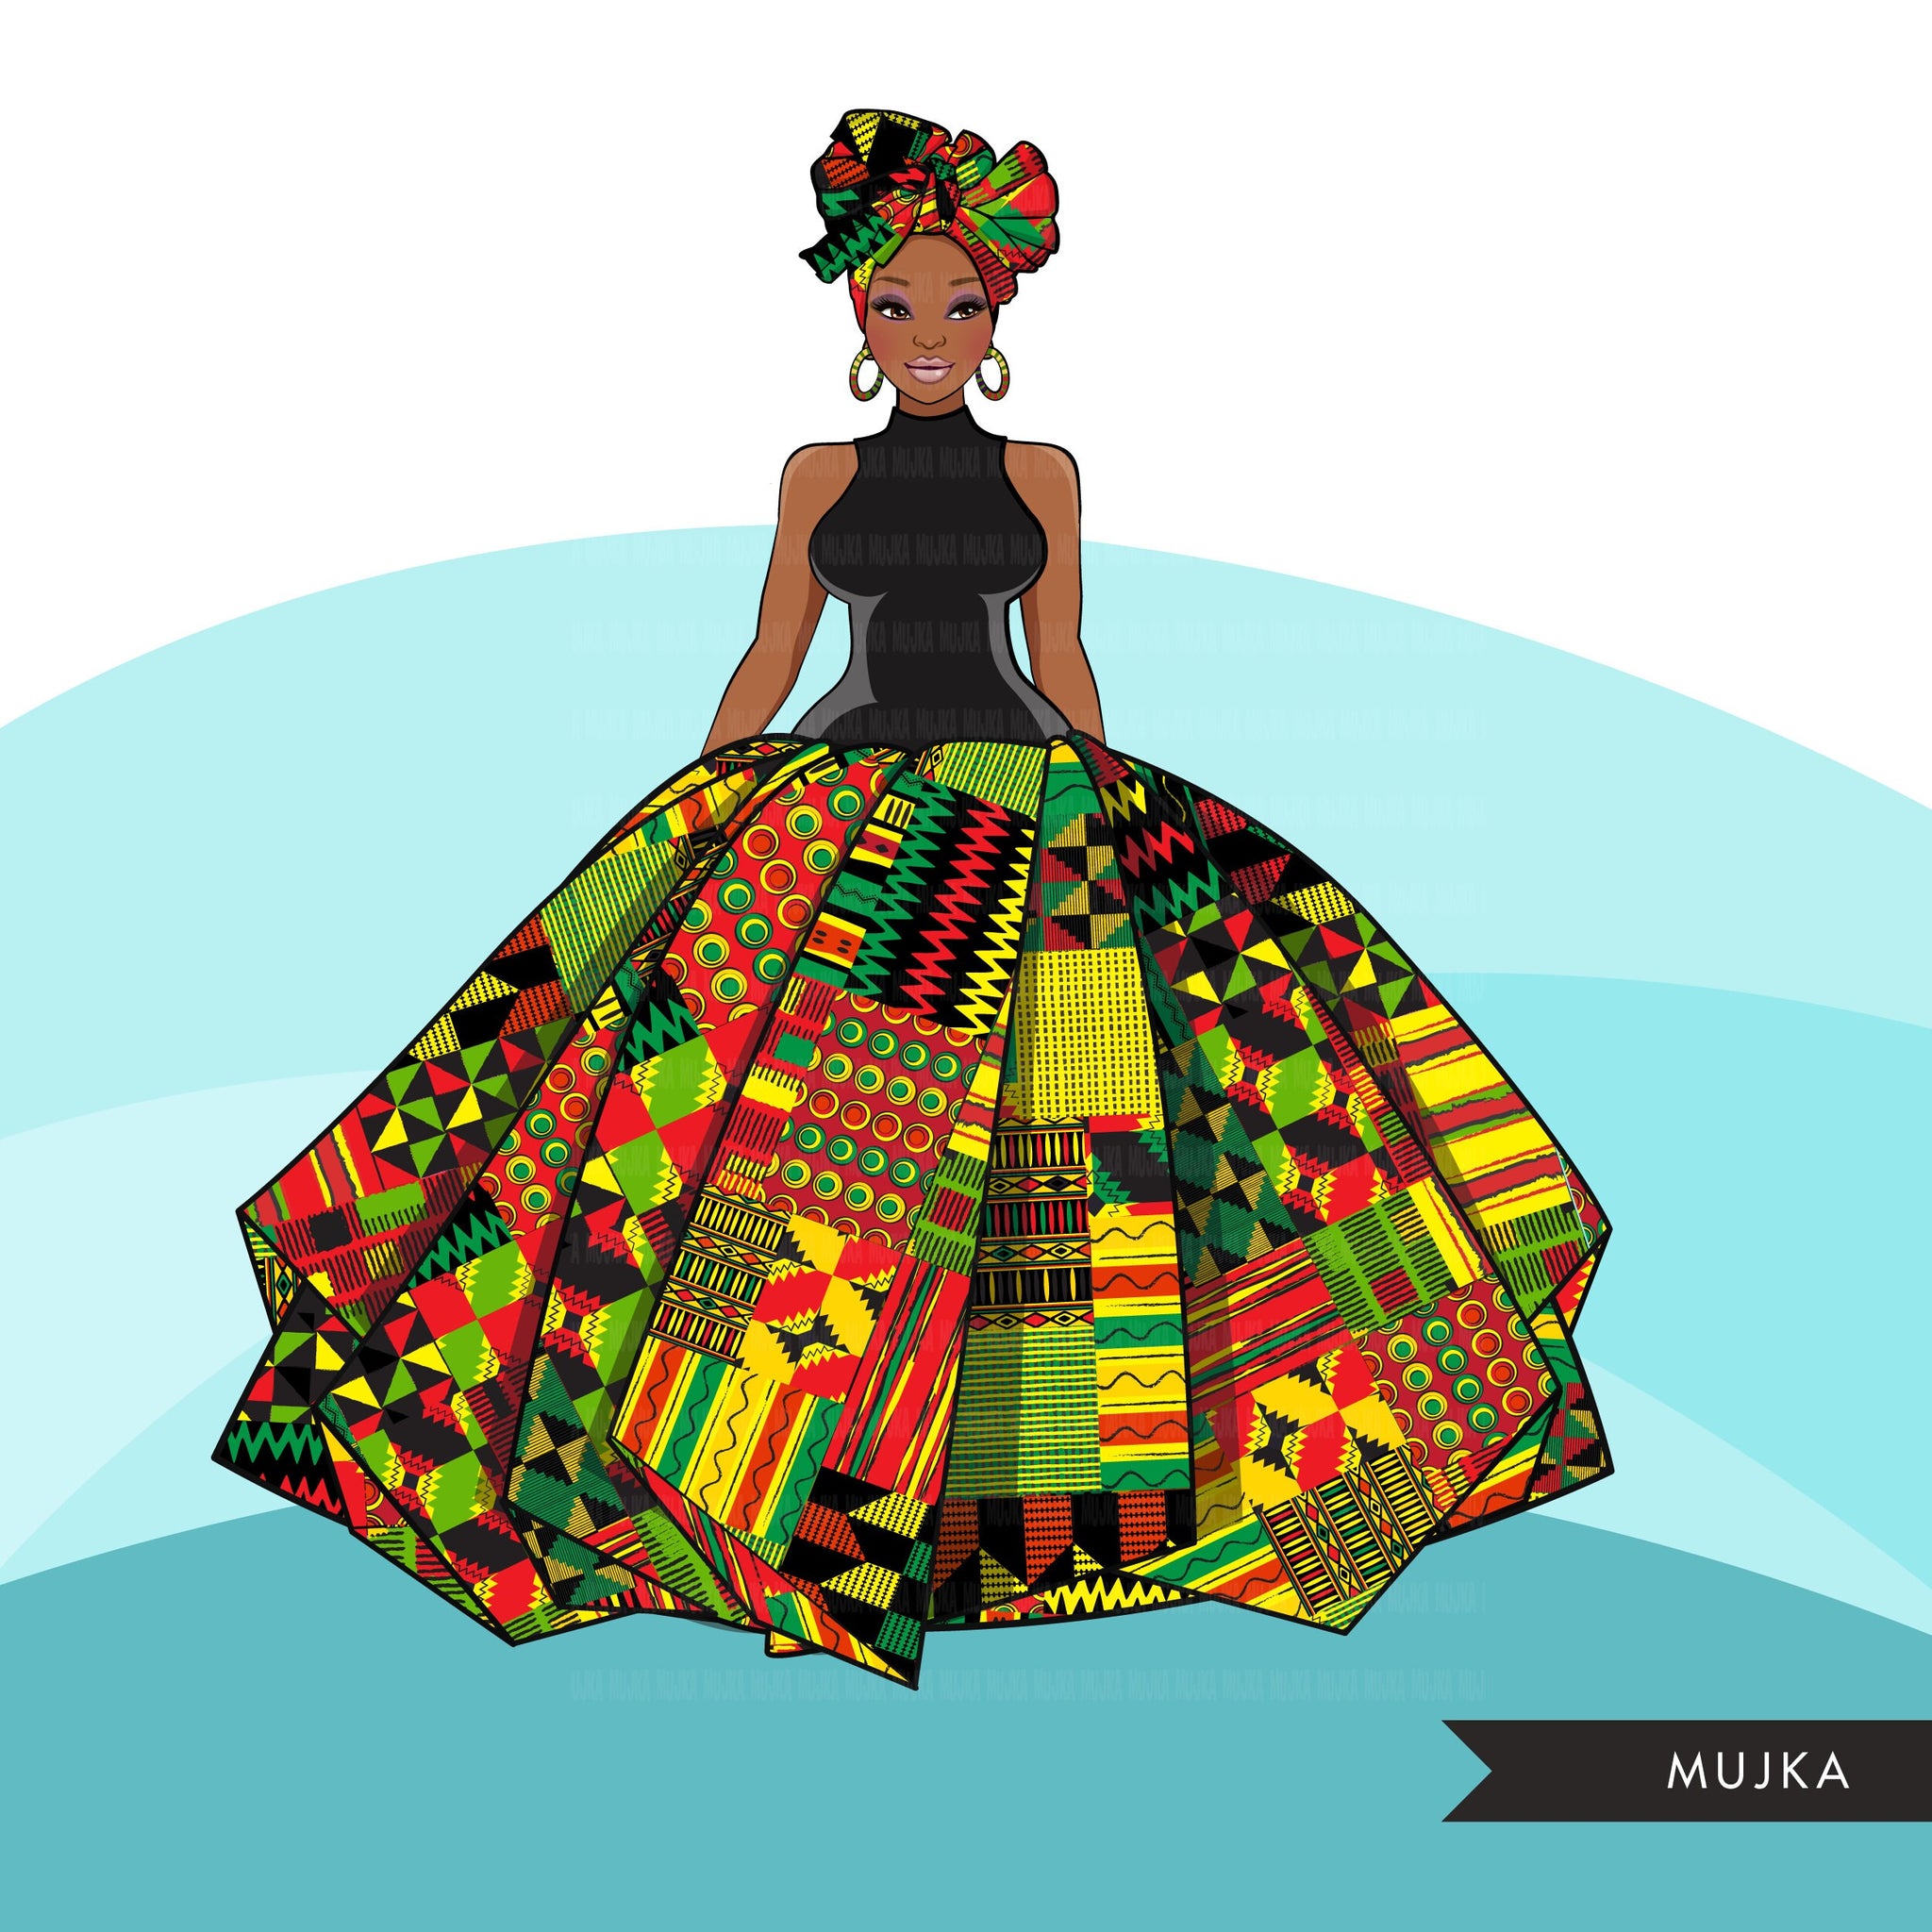 Black History png, African woman png, Black woman png, Kente dress png, ankara woman png, fashion clipart, black woman fashion doll designs